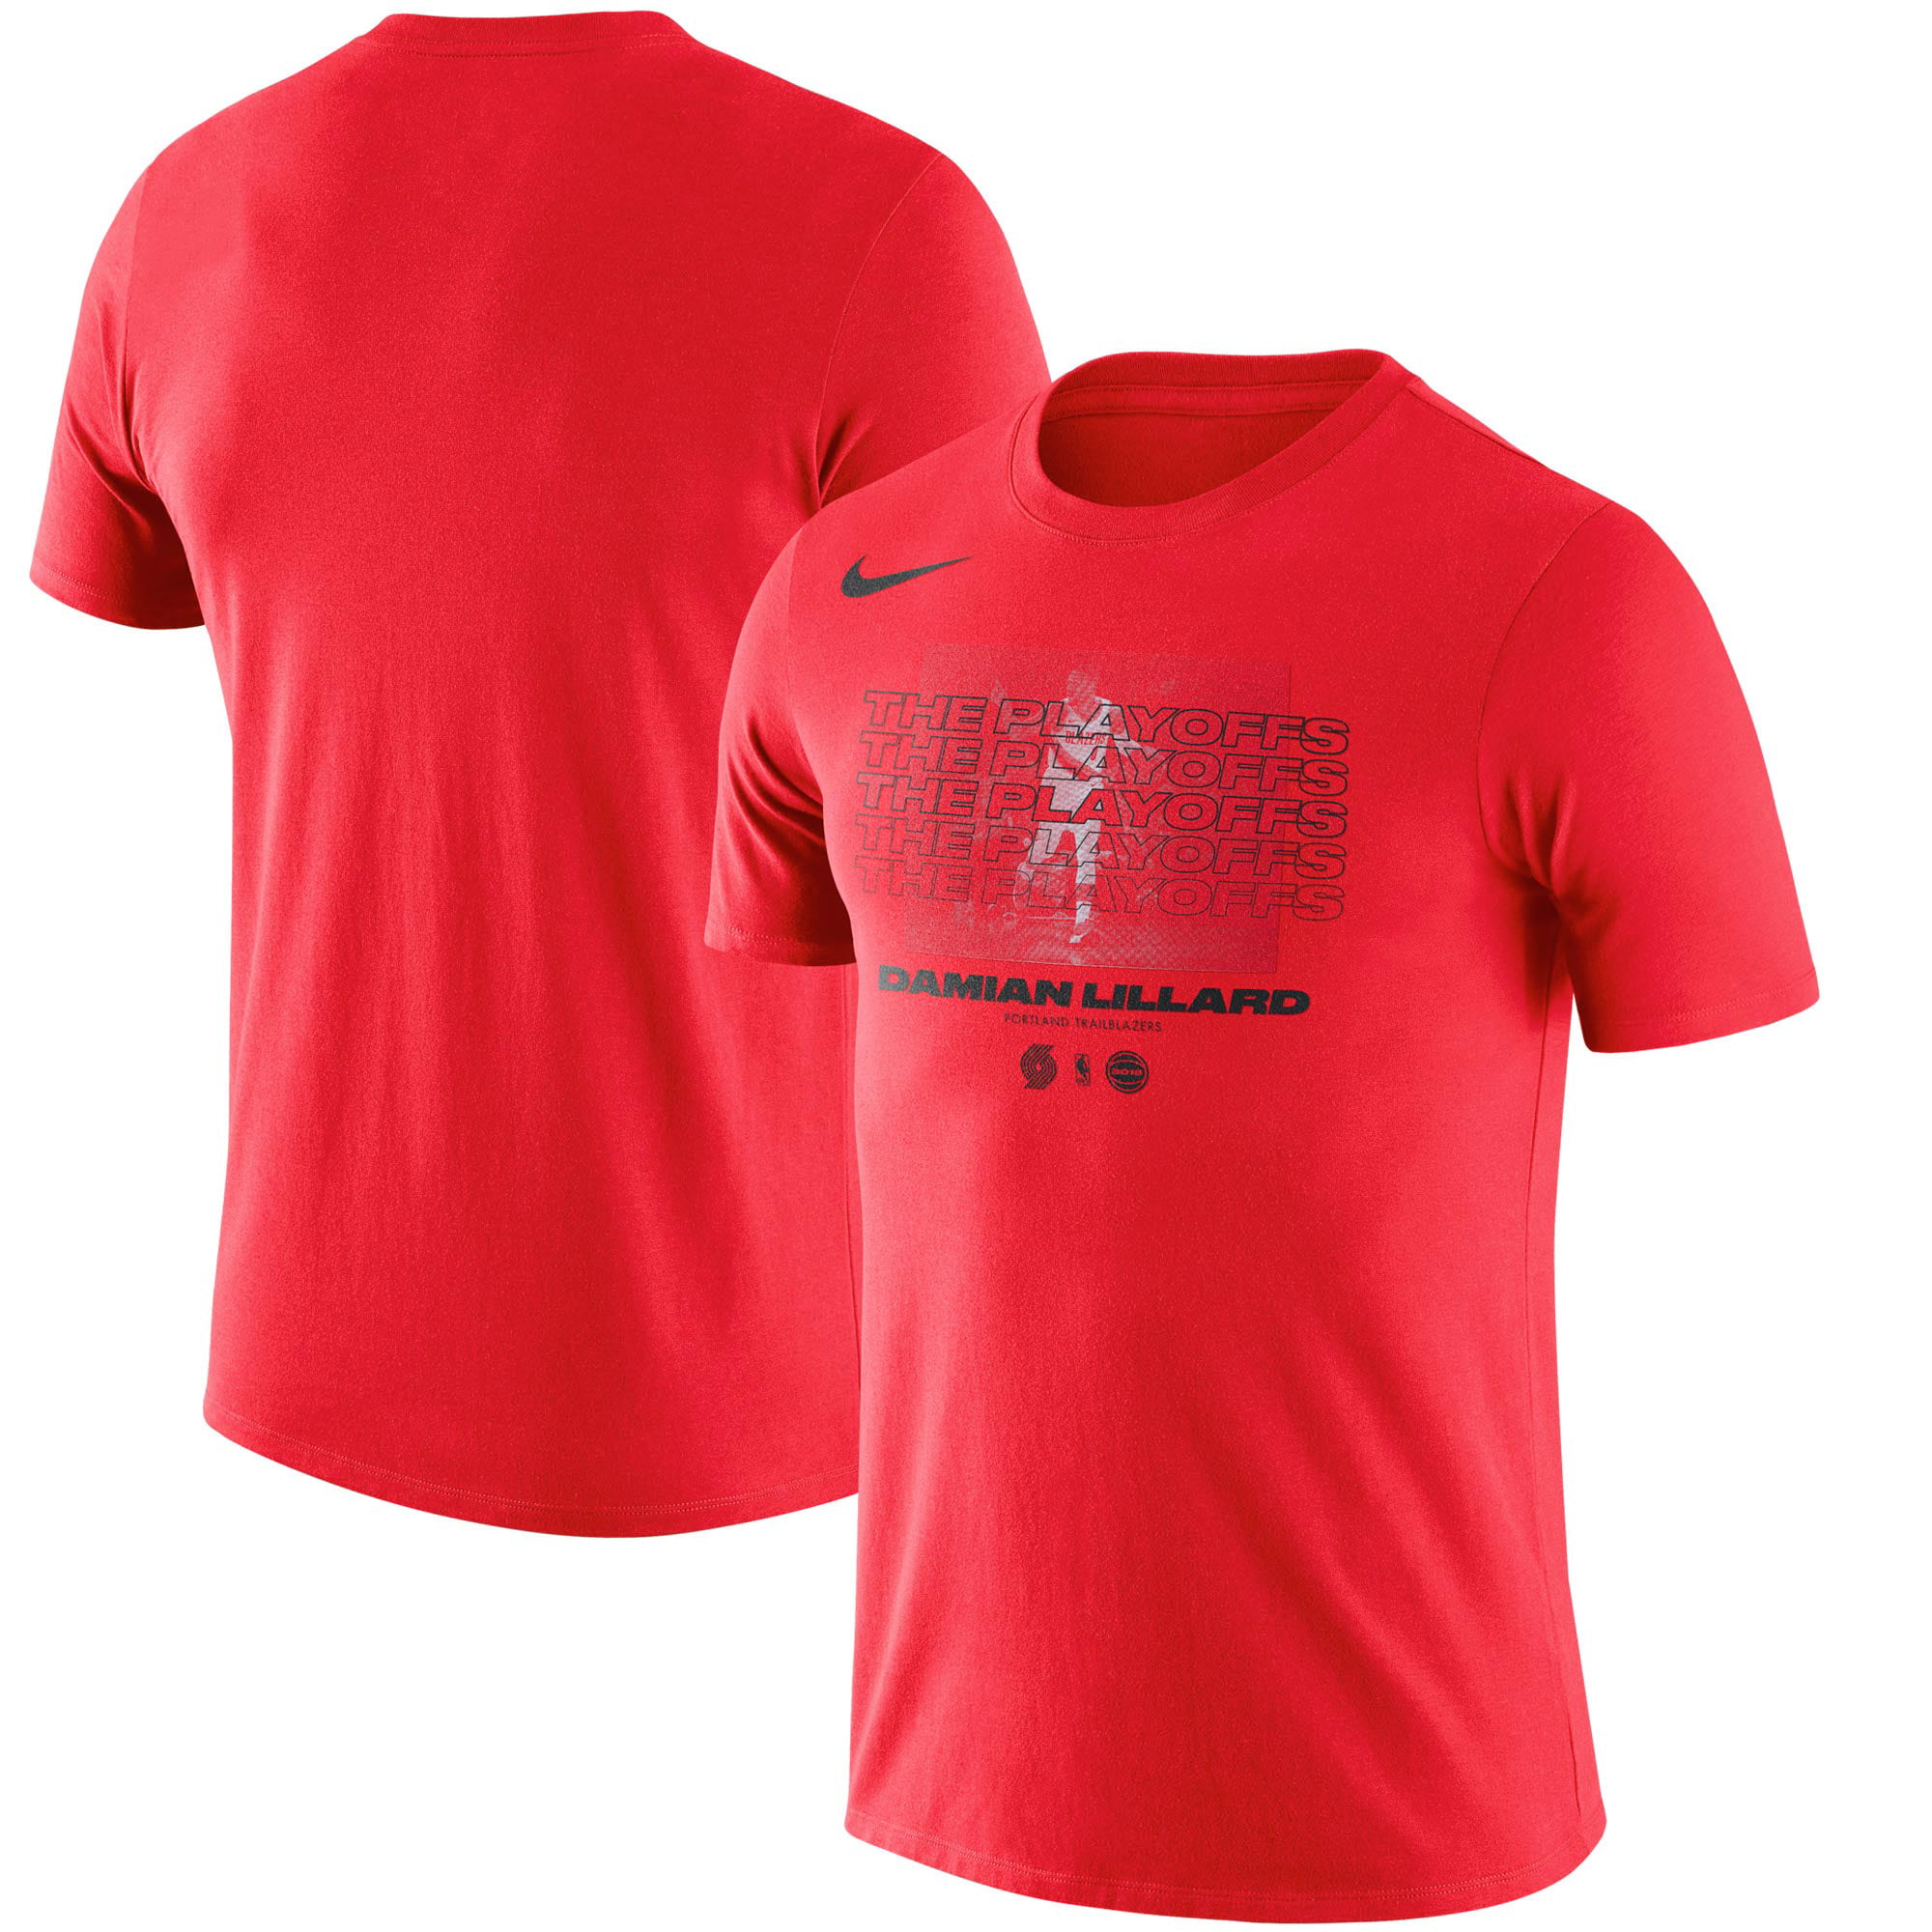 Limited New Popular Damian Lillard Portland Trail Blazers basketba T-shirt S-2XL 